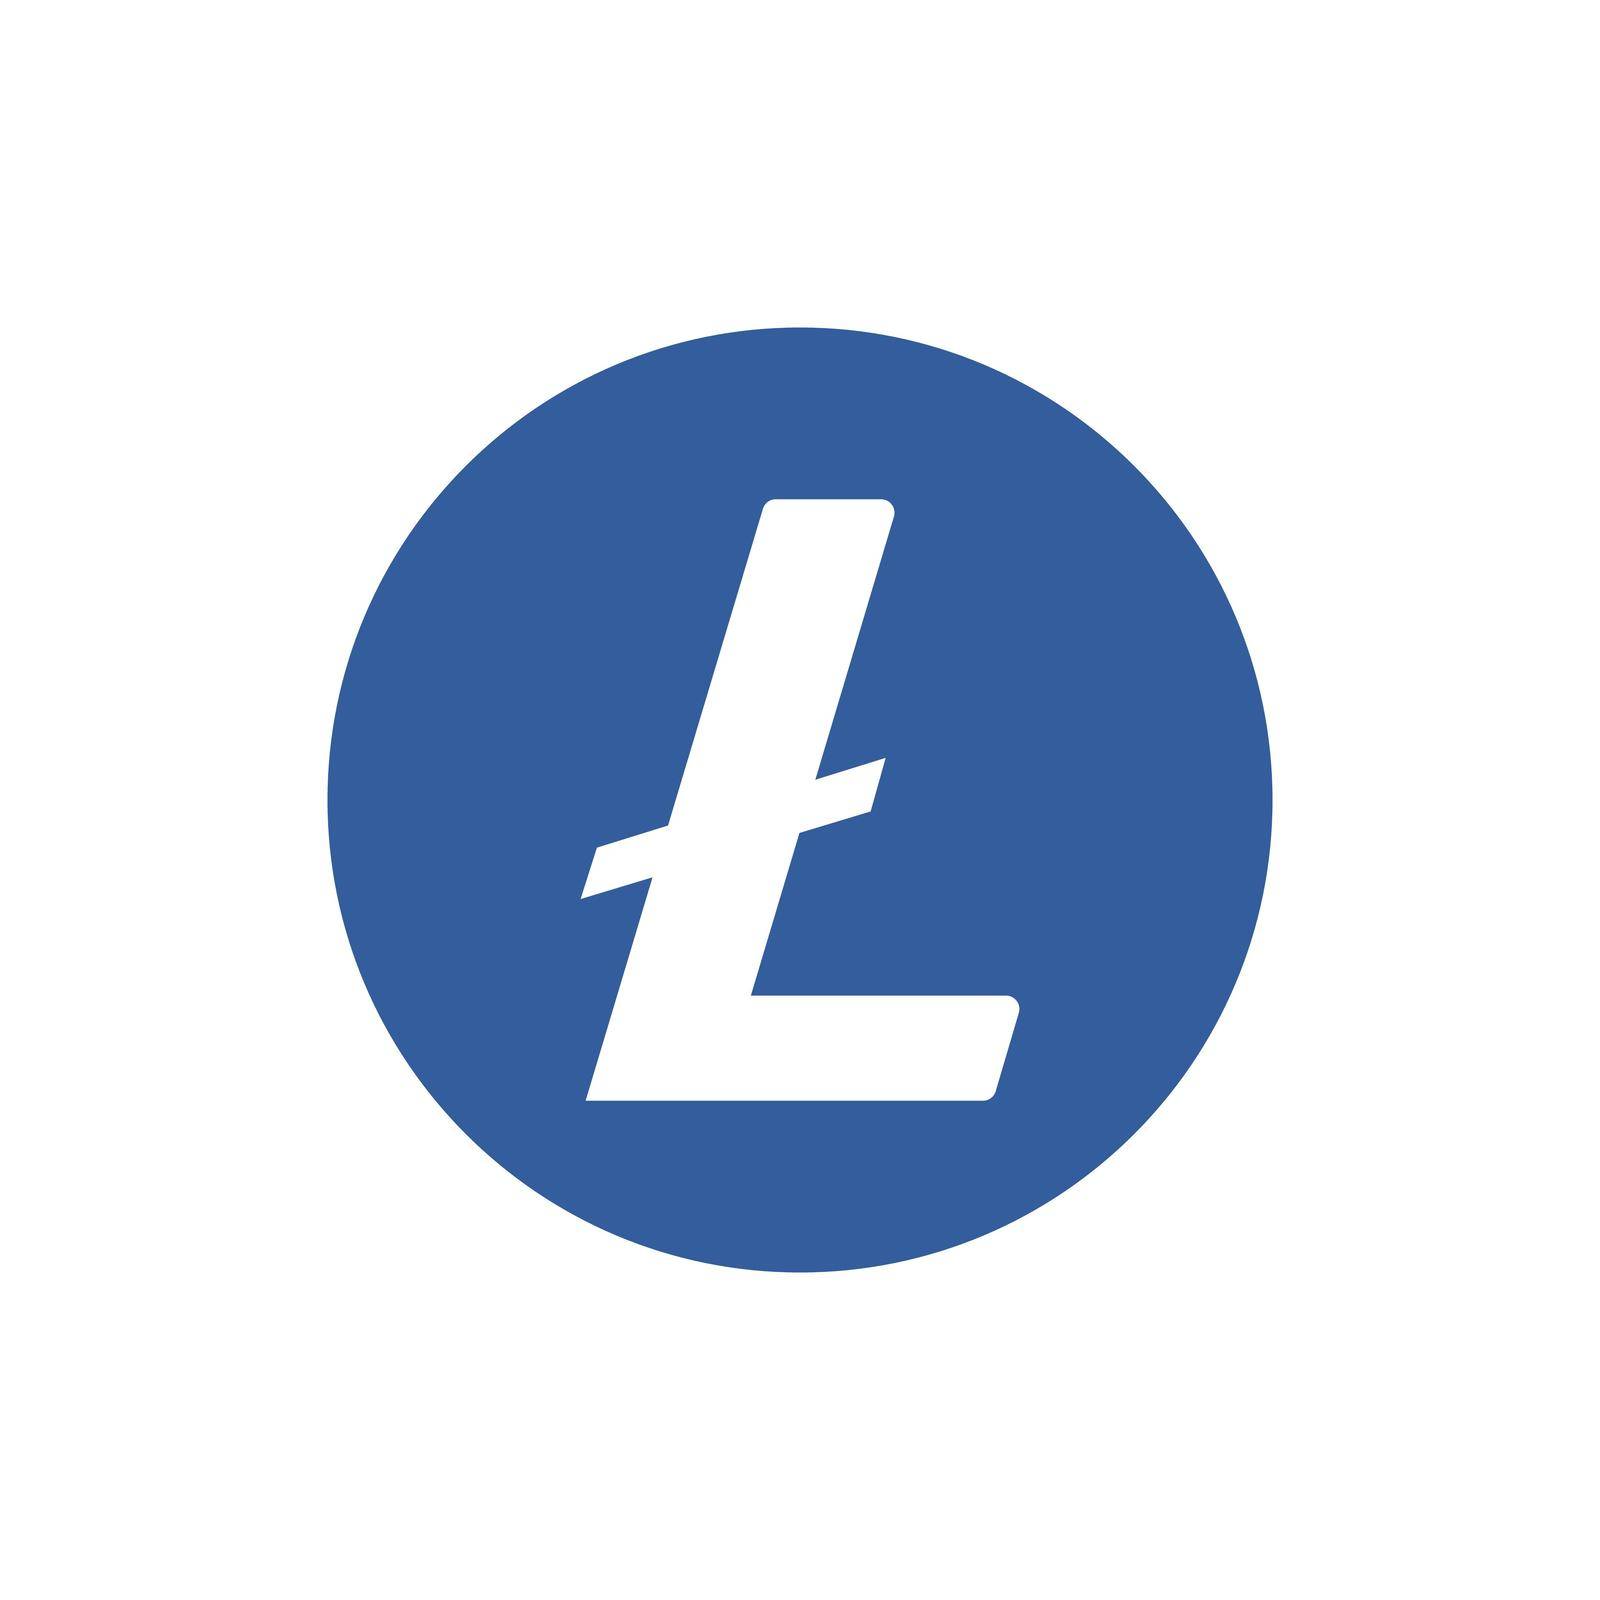 Litecoin LTC coin icon isolated on white background.